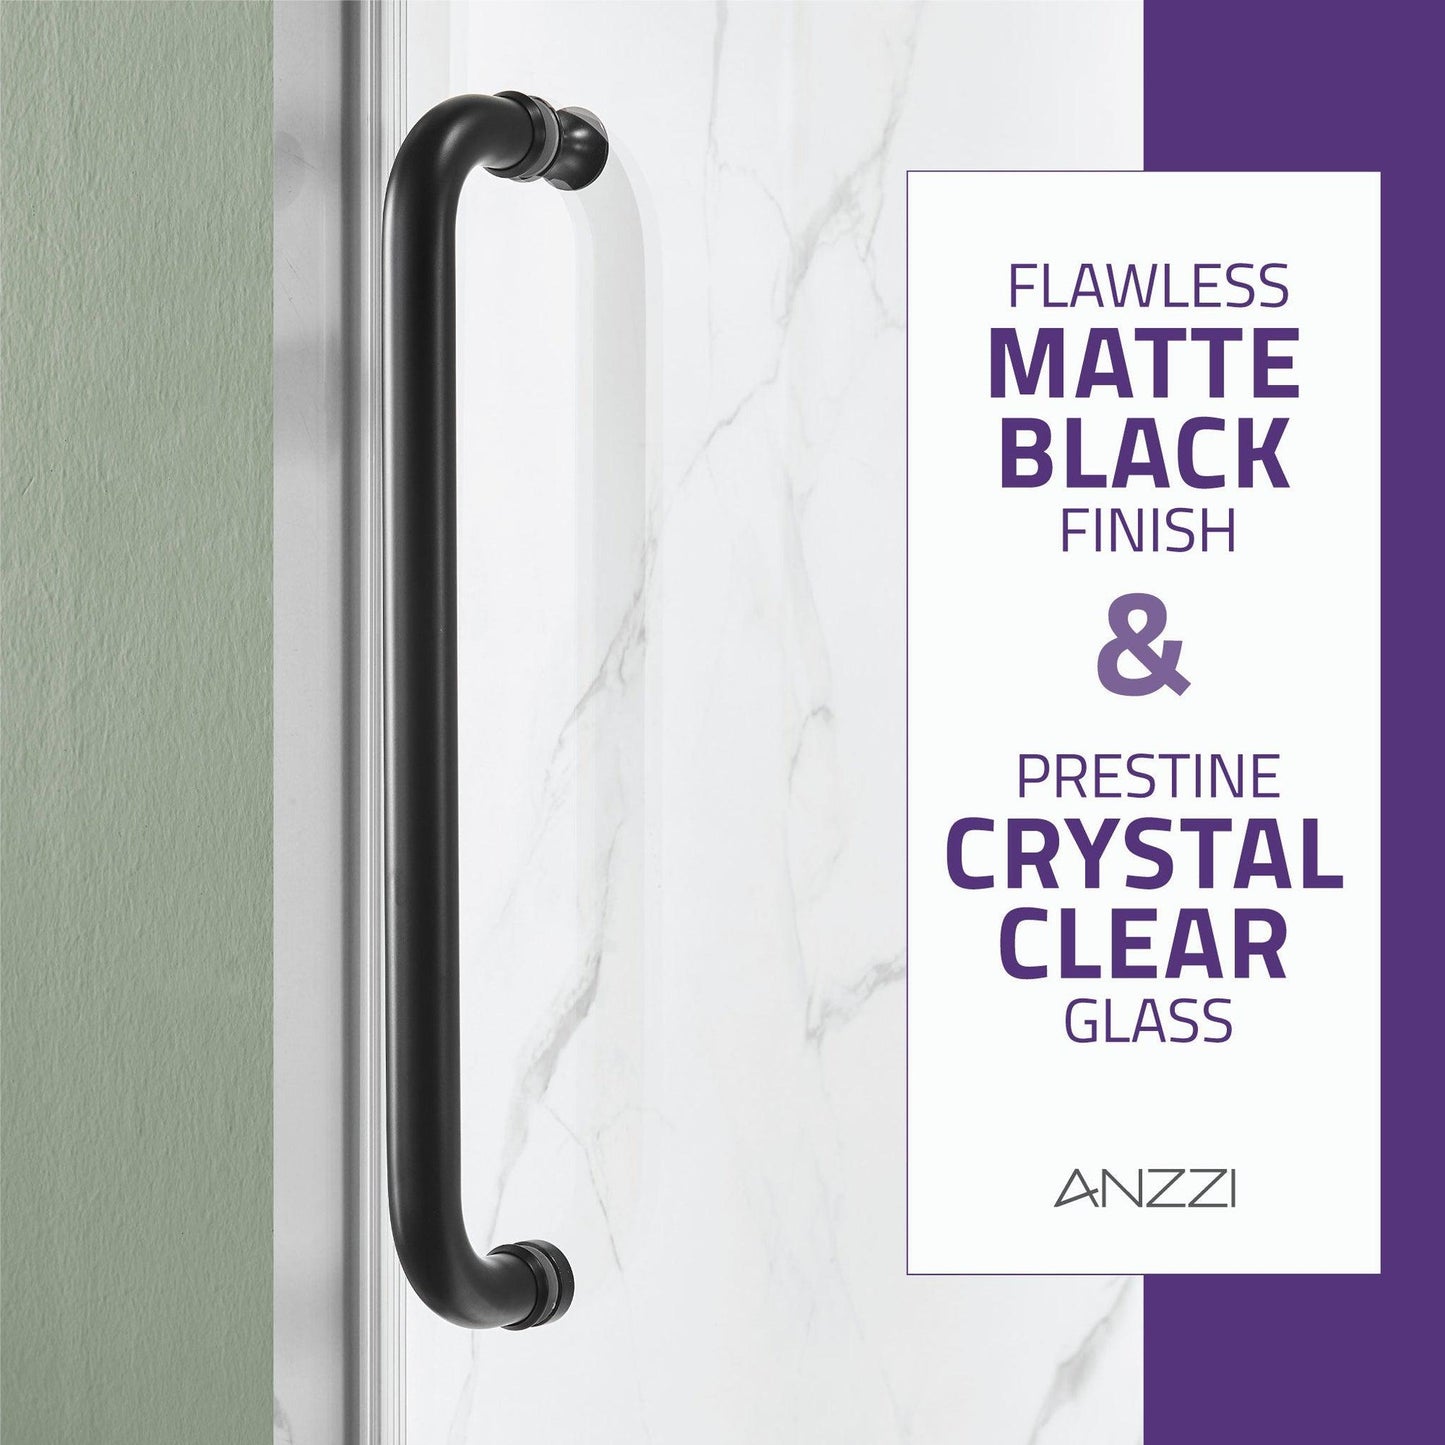 ANZZI Leon Series 48" x 76" Frameless Rectangular Matte Black Sliding Shower Door With Handle and Tsunami Guard